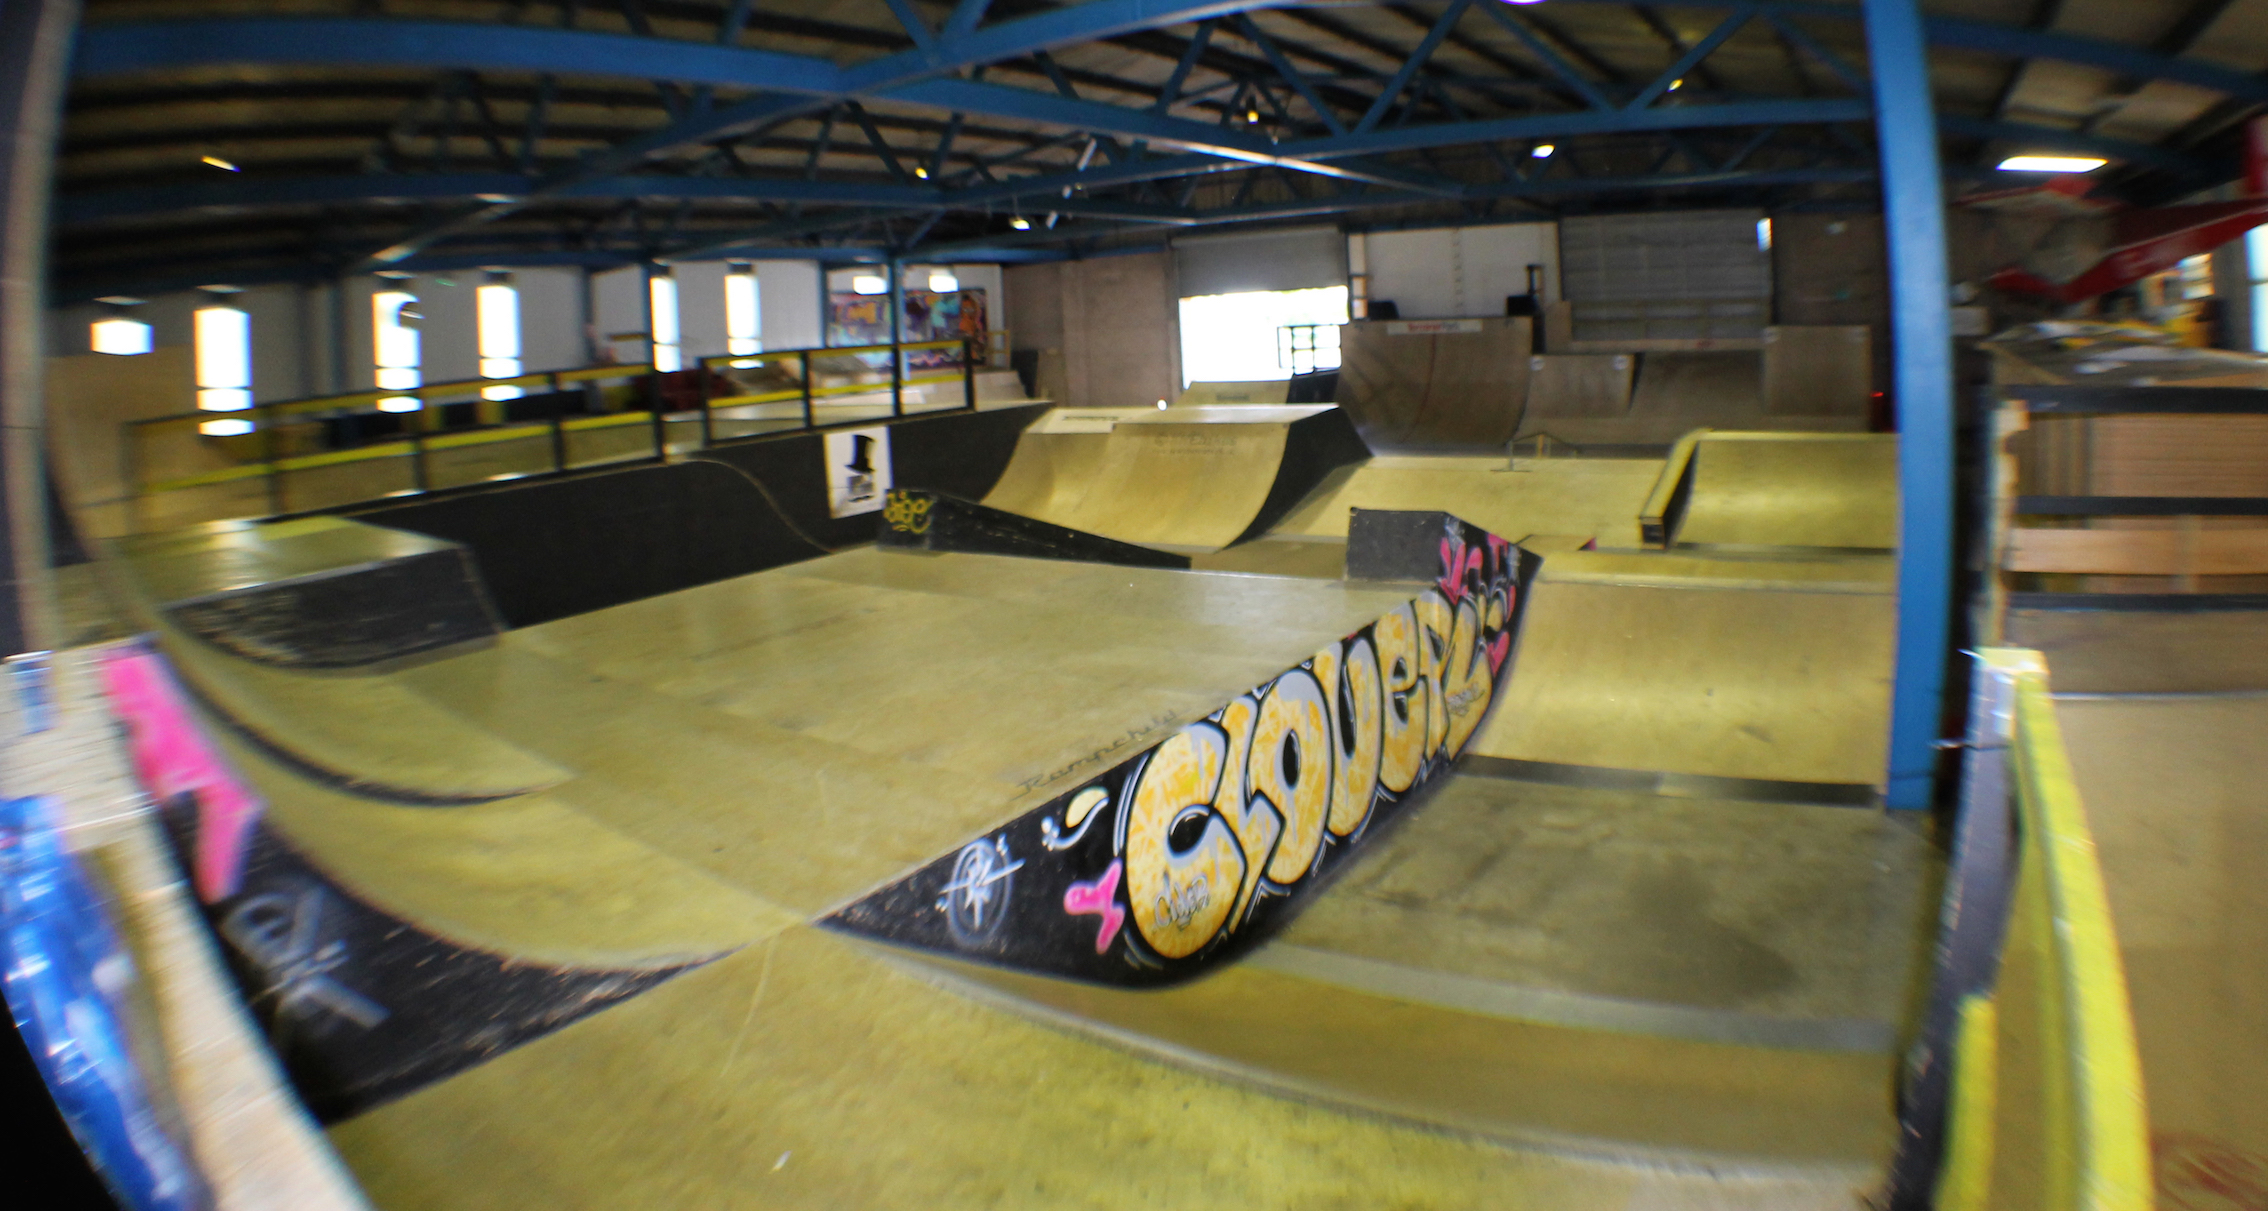 terminal 1 skatepark melton mowbray review tips skateboarding in leicestershire u k